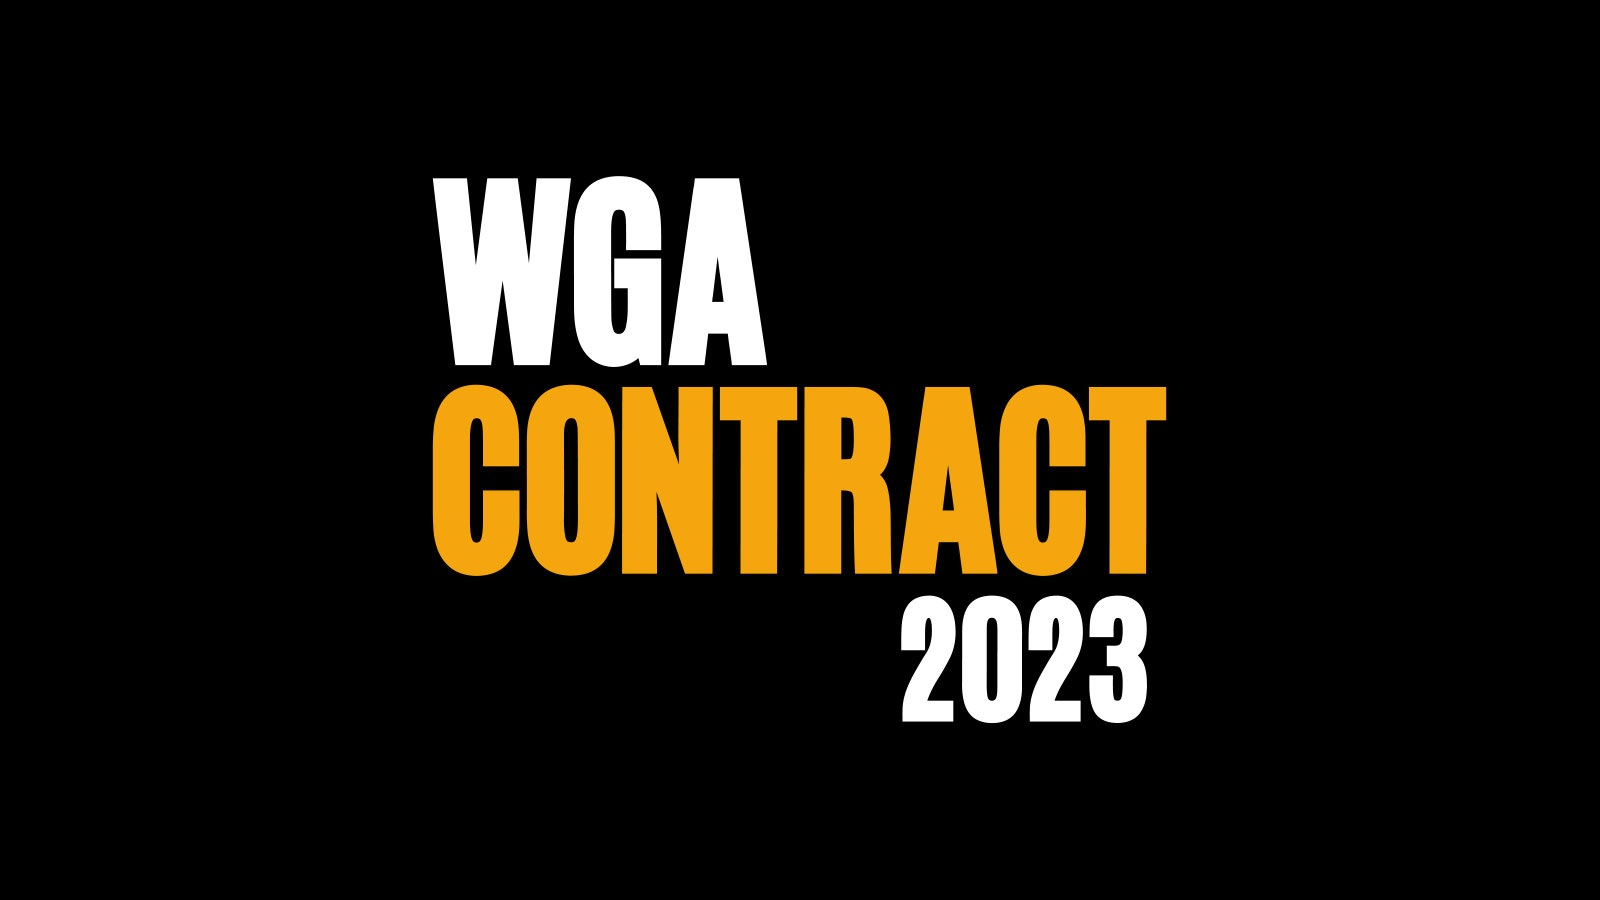 (c) Wgacontract2023.org